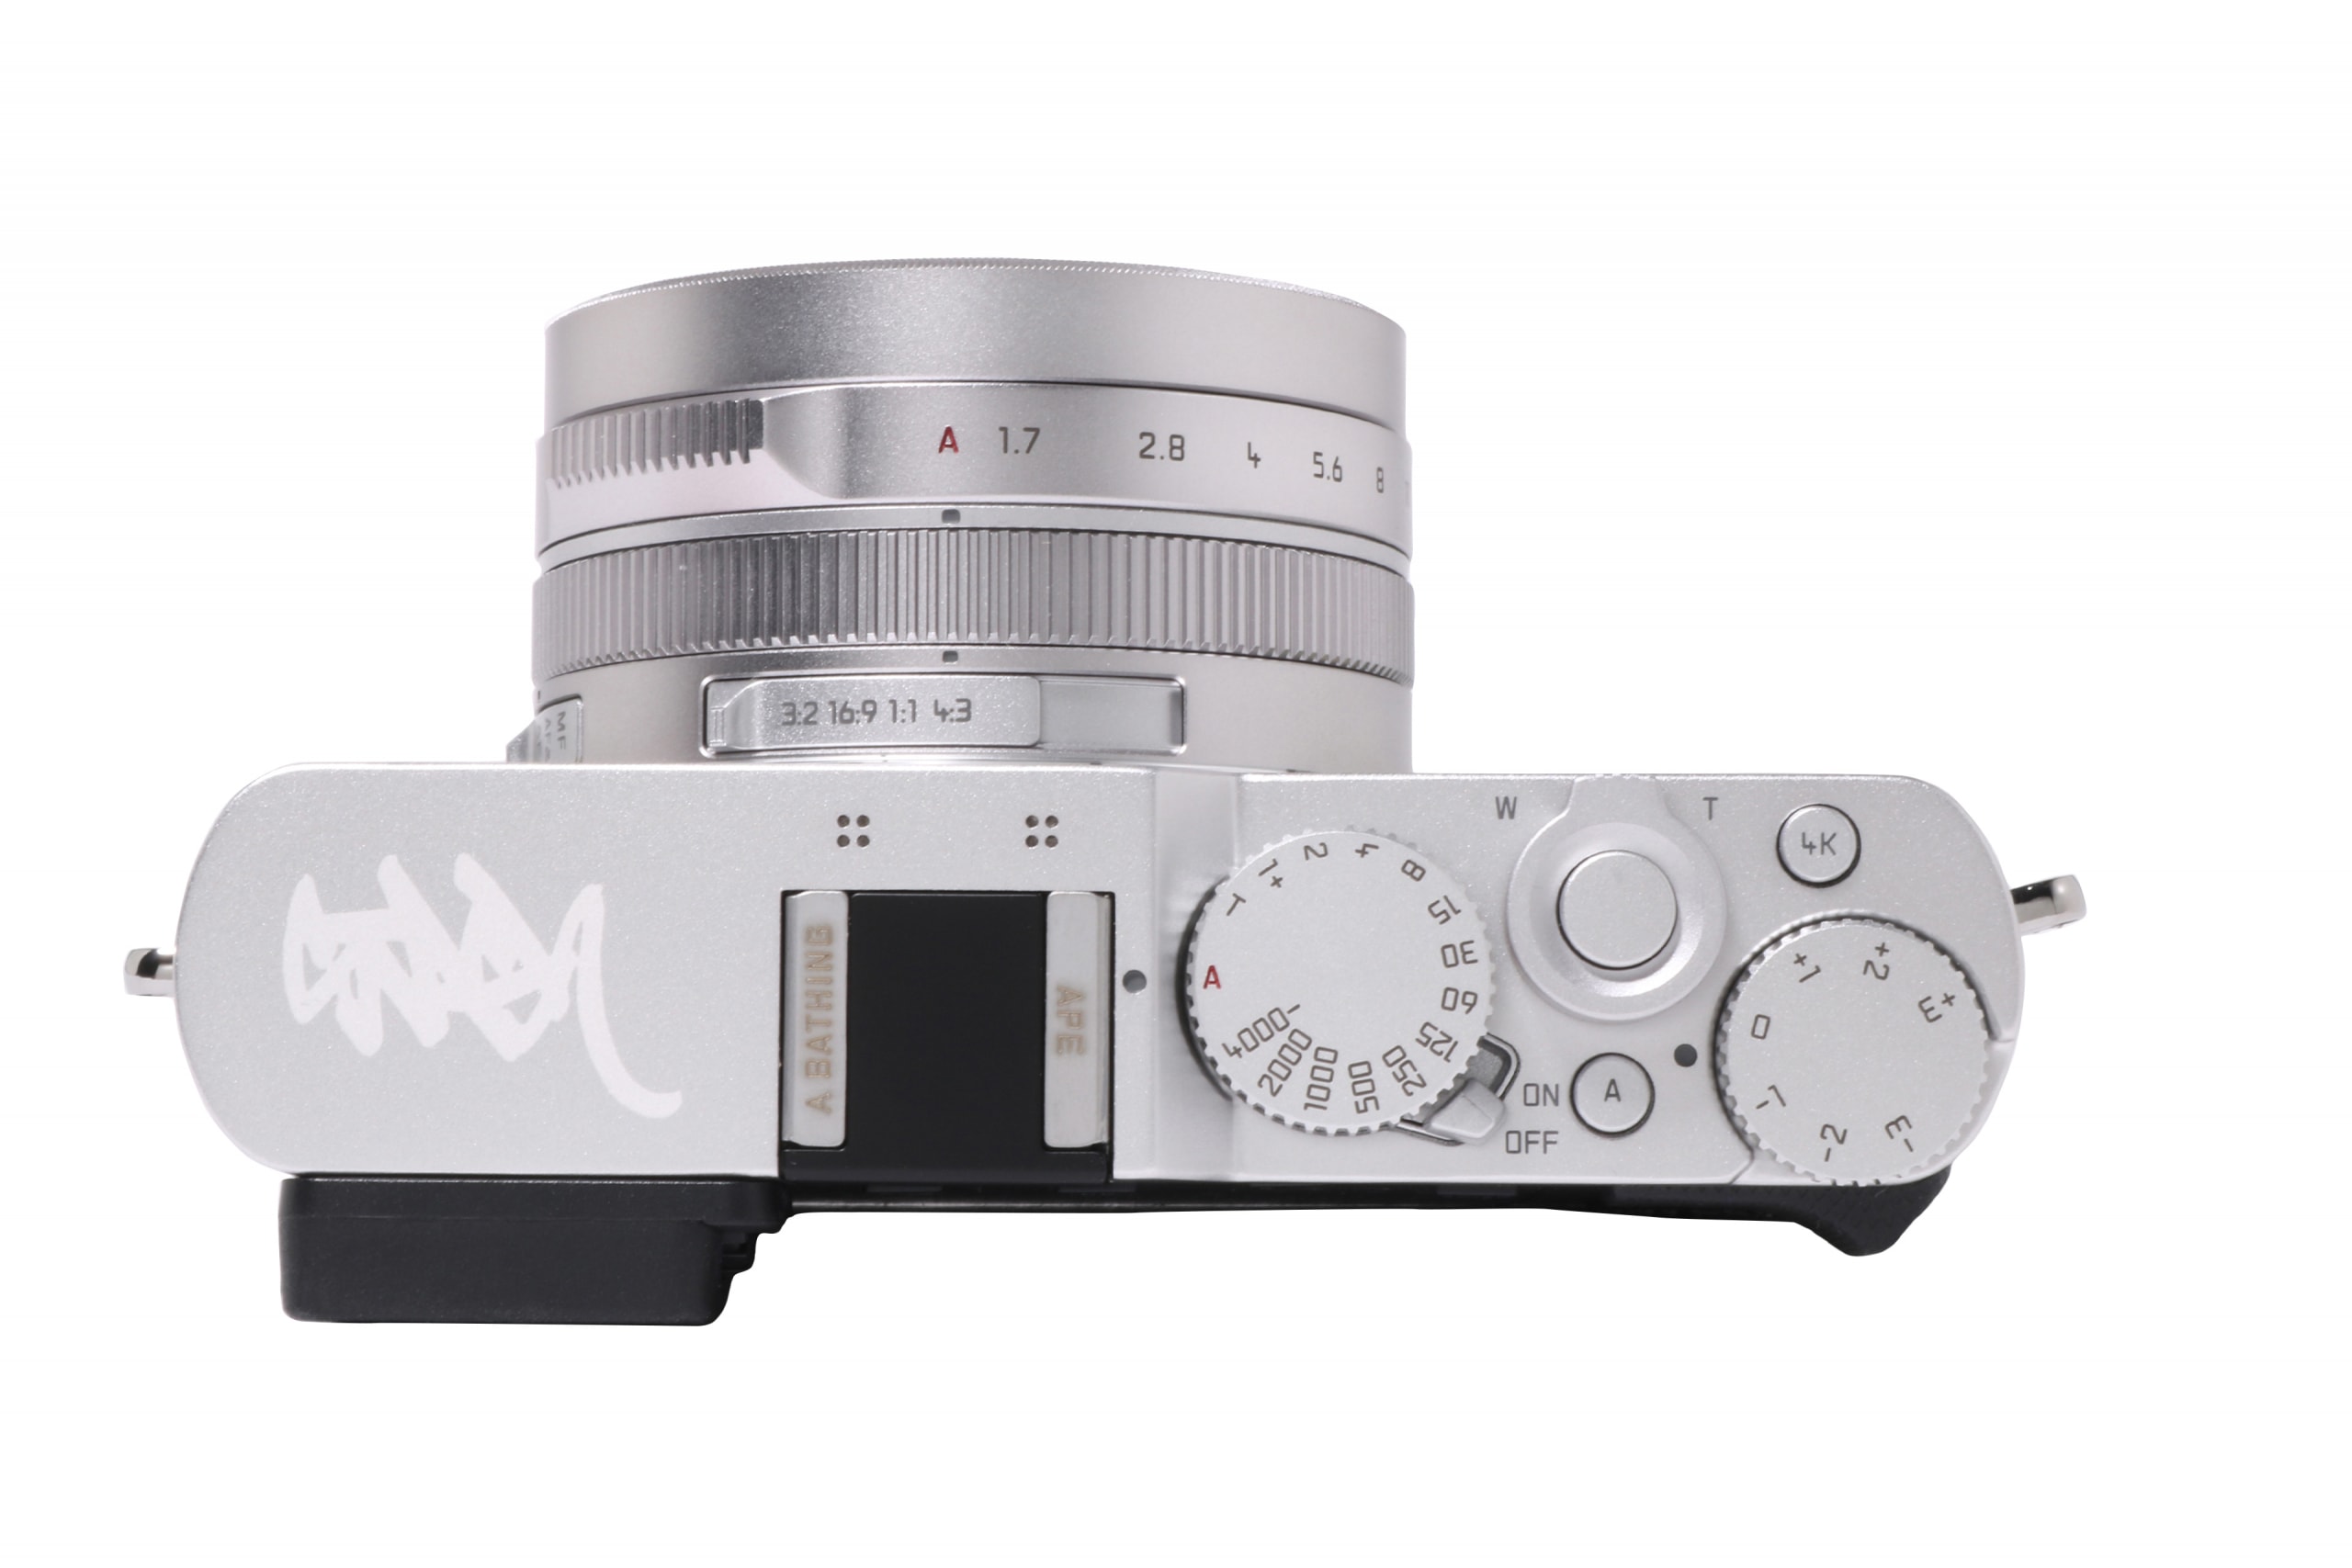 A BATHING APE®︎ x STASH x  LEICA  三方联名 D-LUX 7 相机正式登场